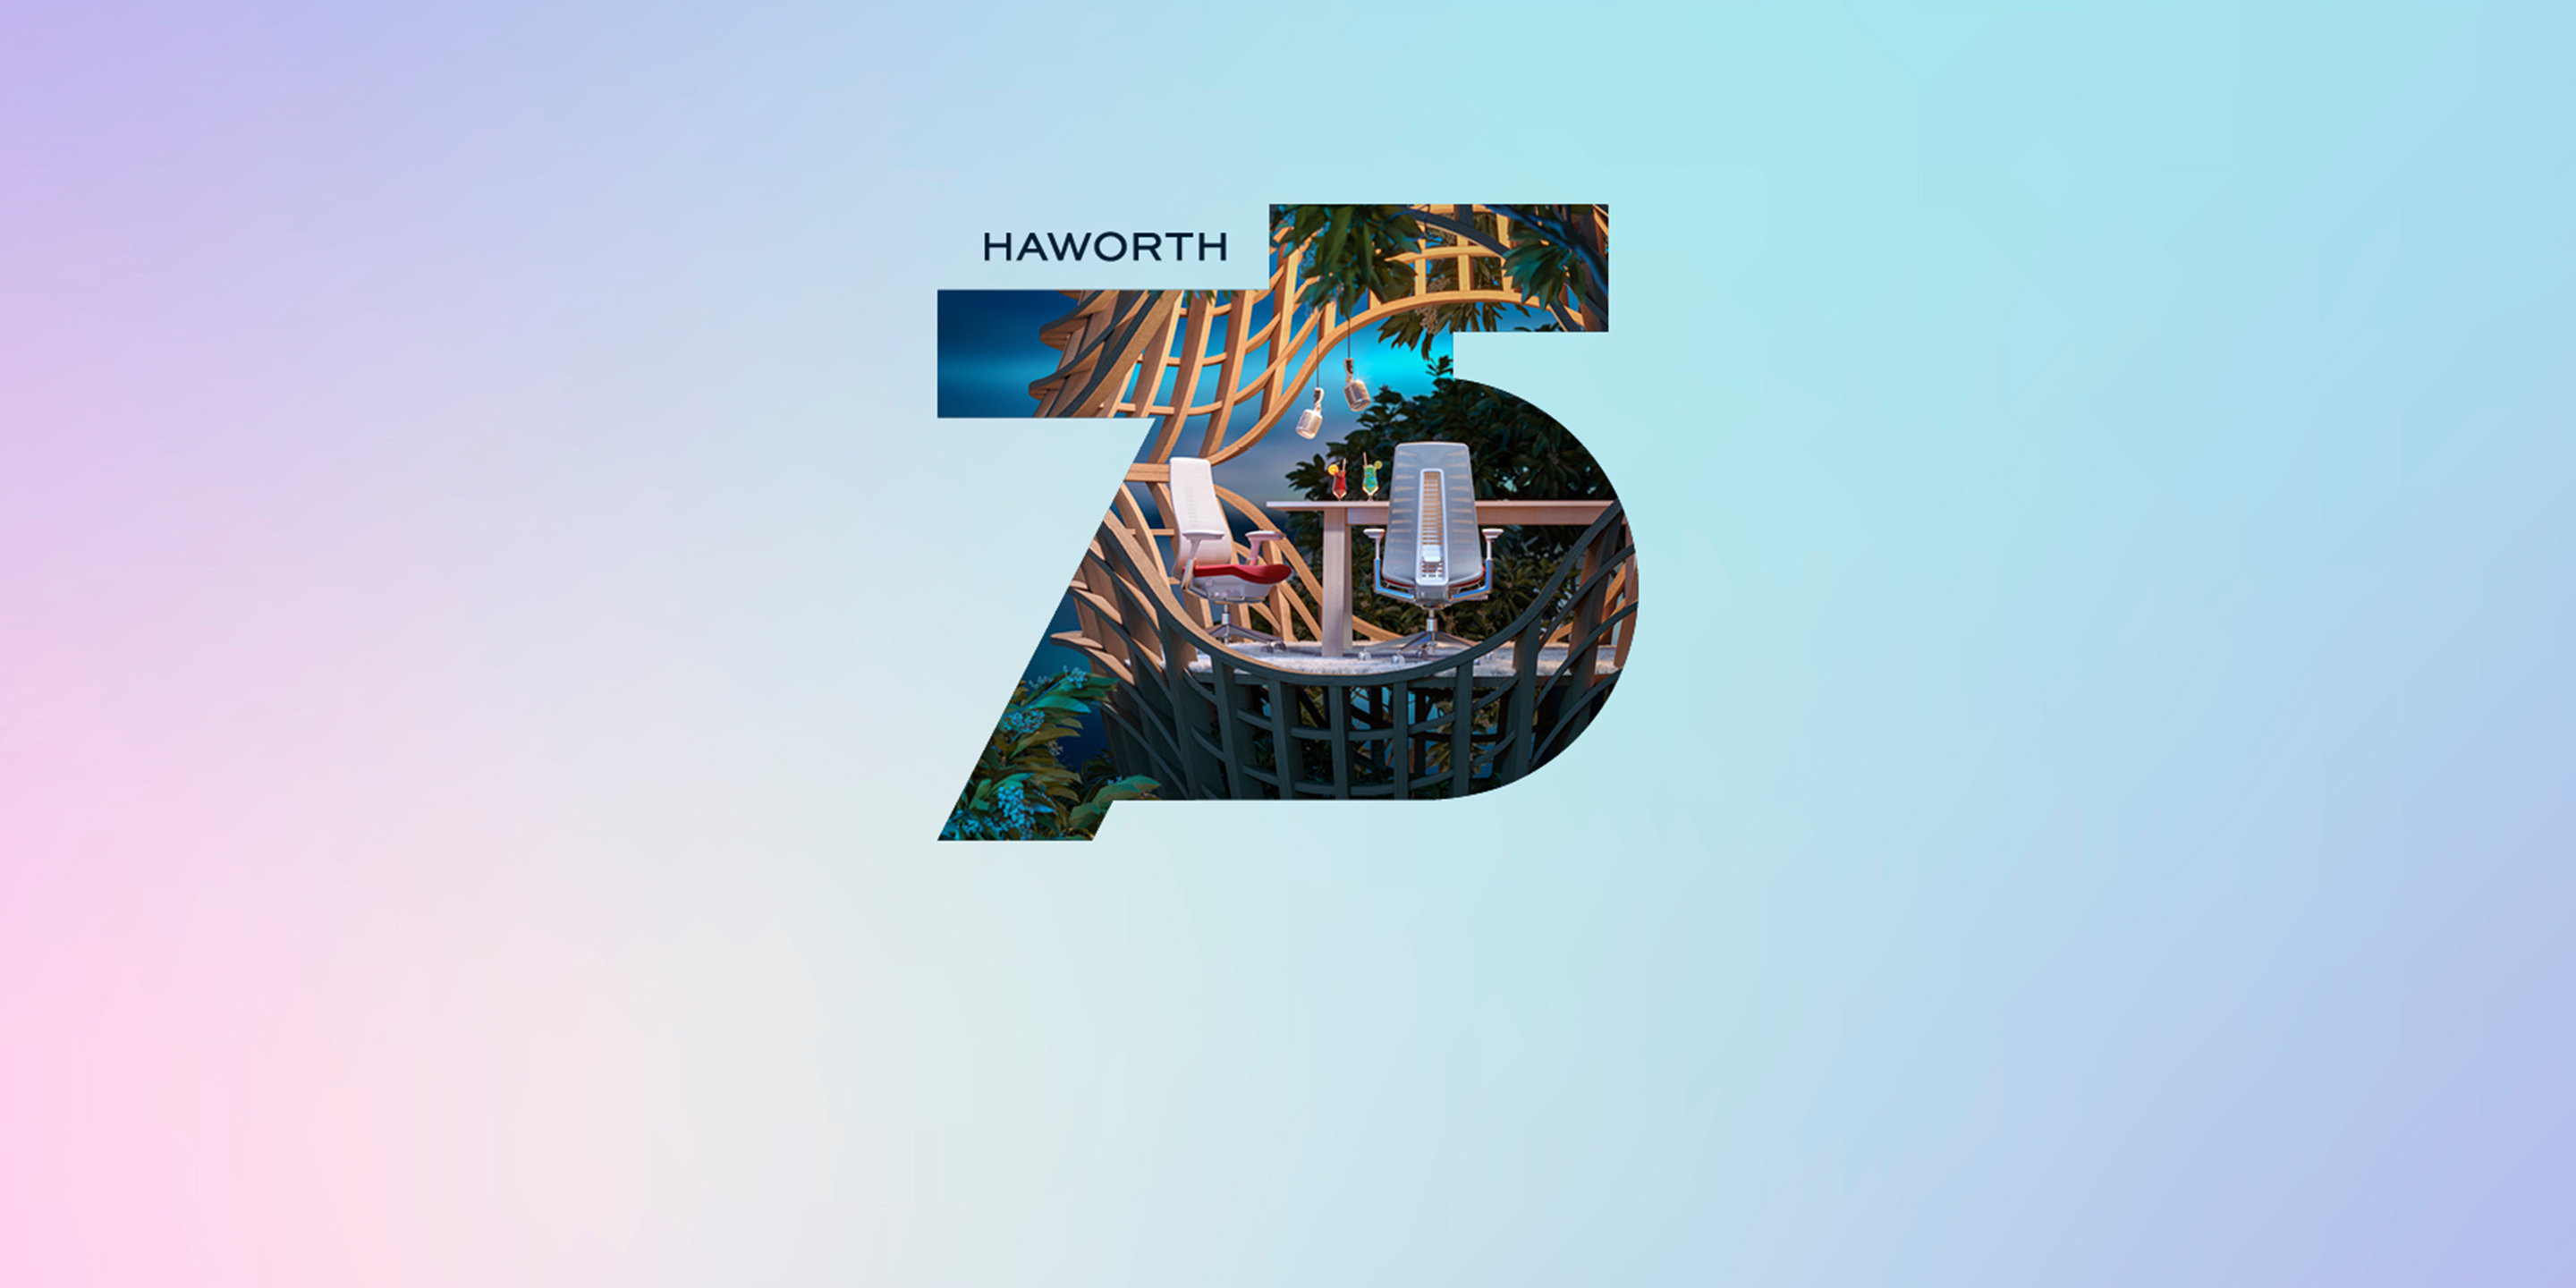 Haworth 75th anniversary logo featuring Fern chairs/